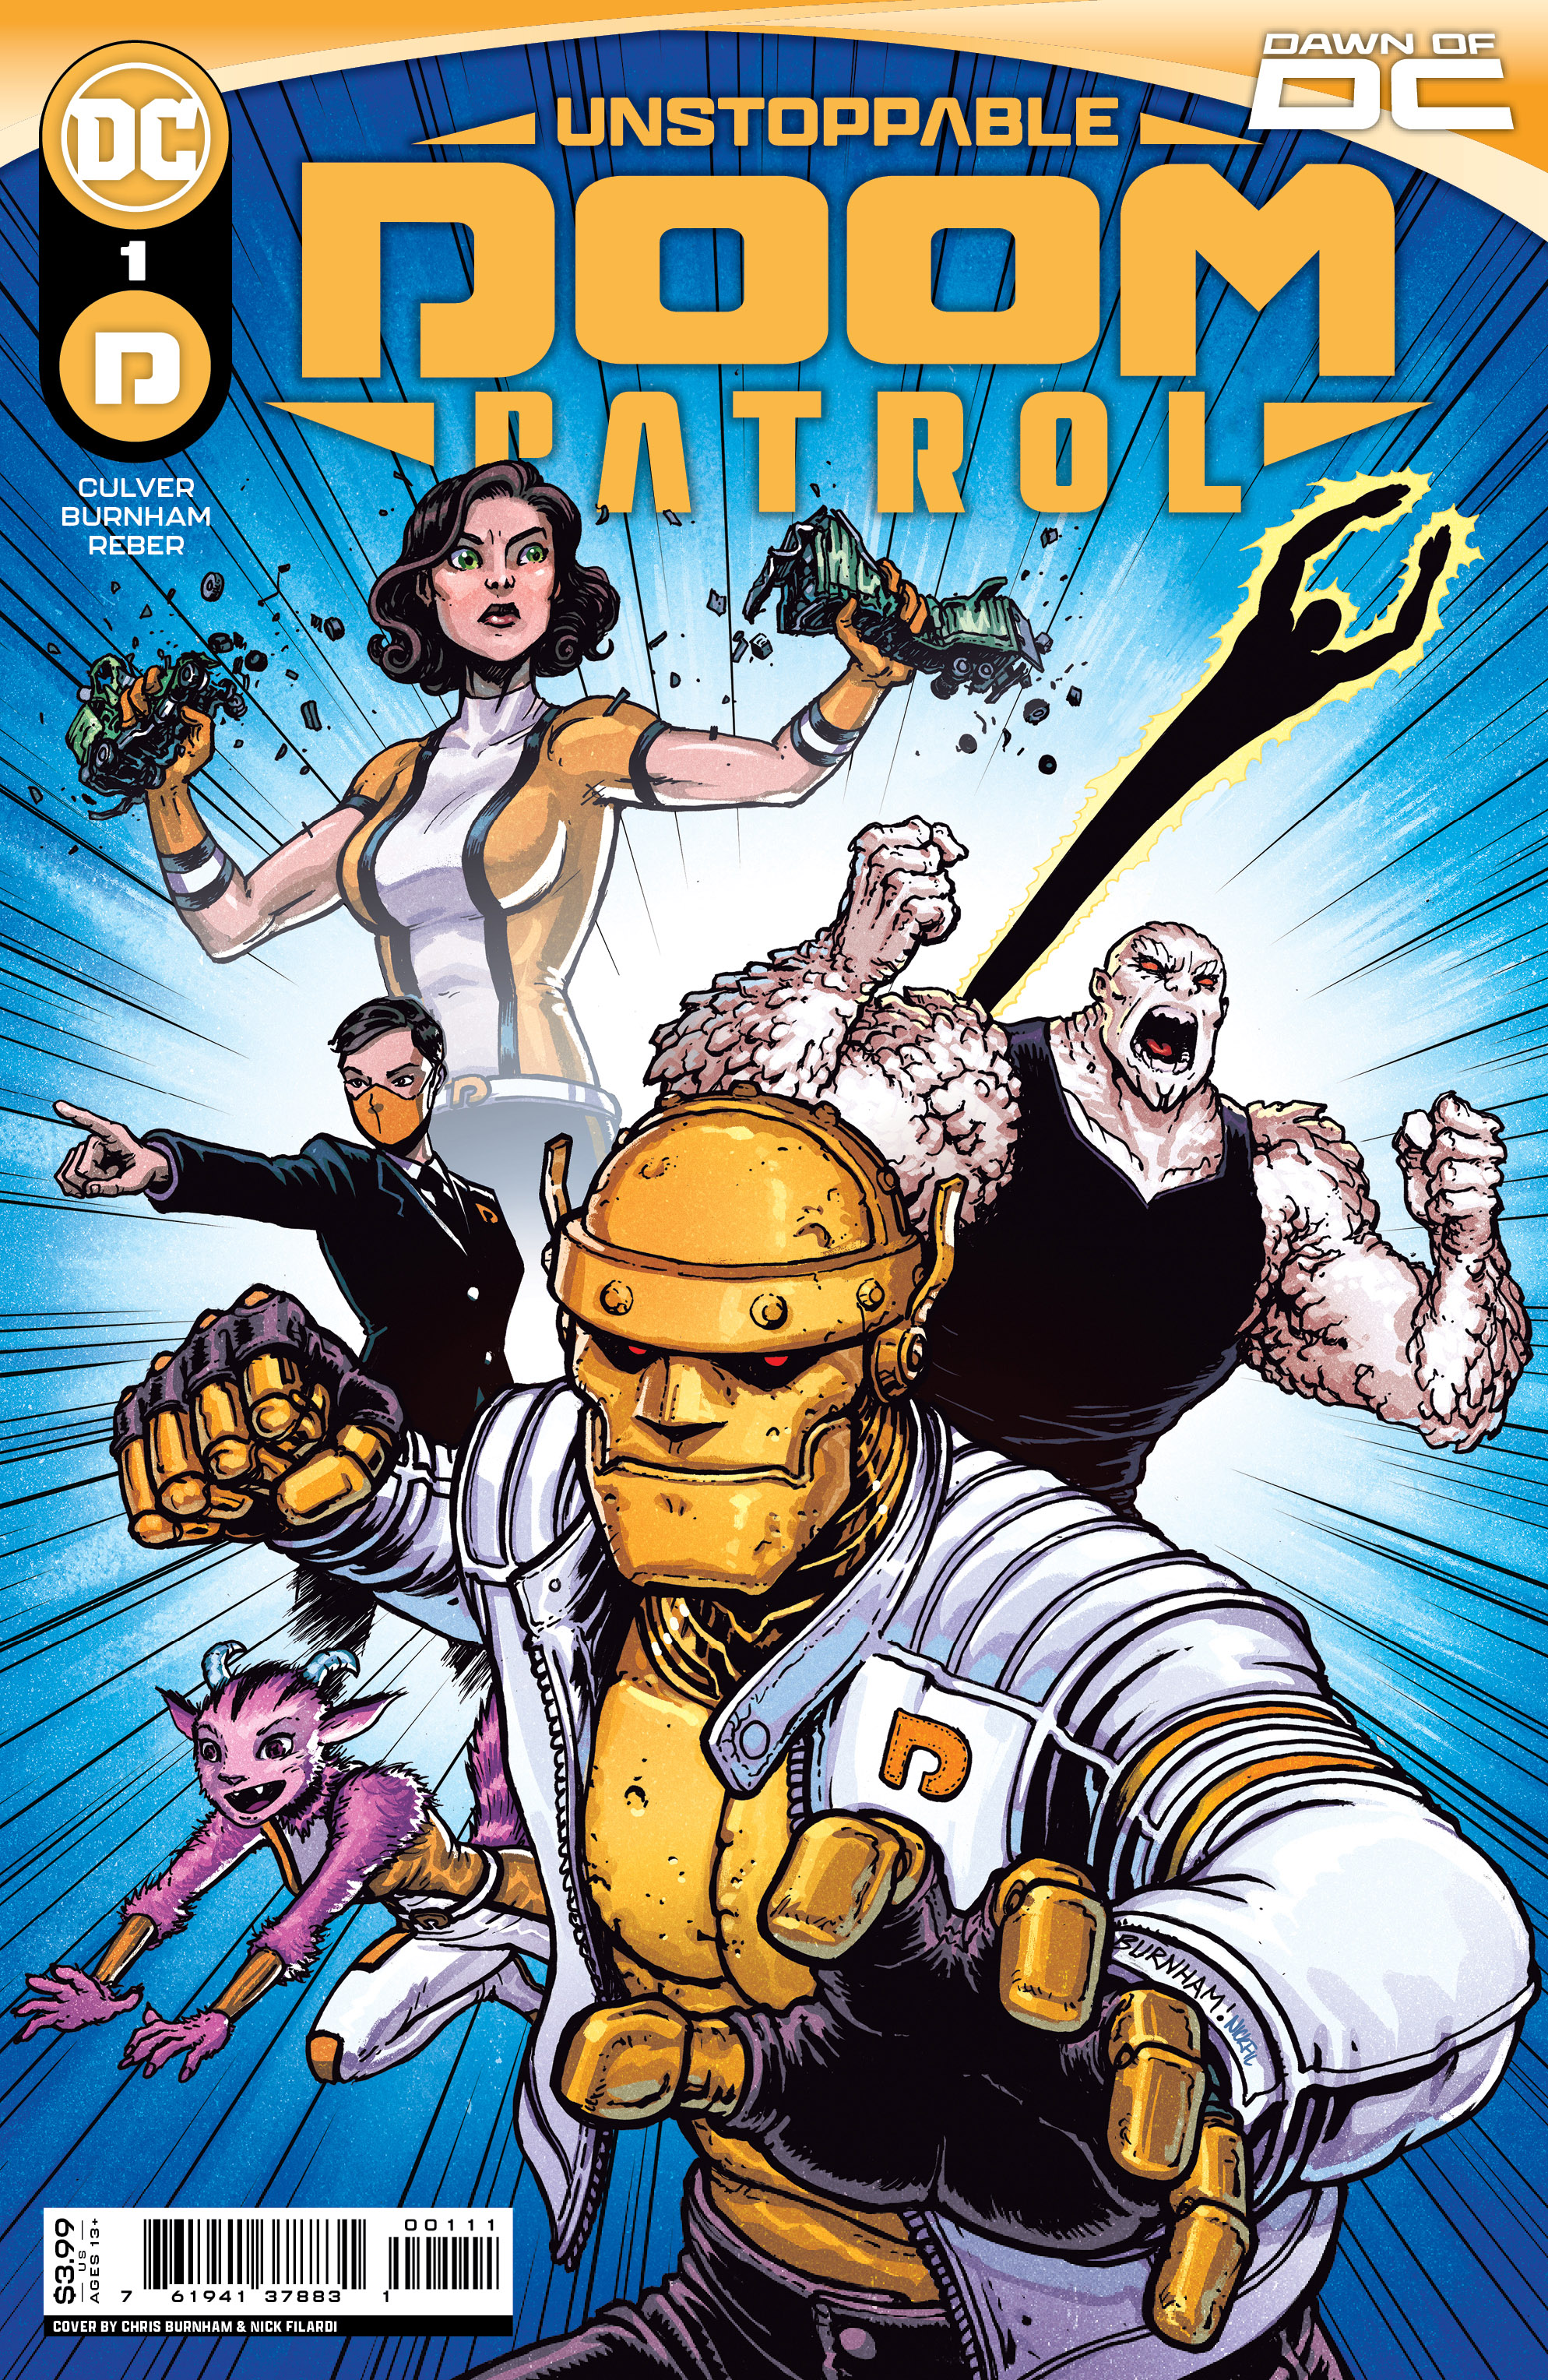 Unstoppable Doom Patrol #1 Cover A Chris Burnham (Of 6)